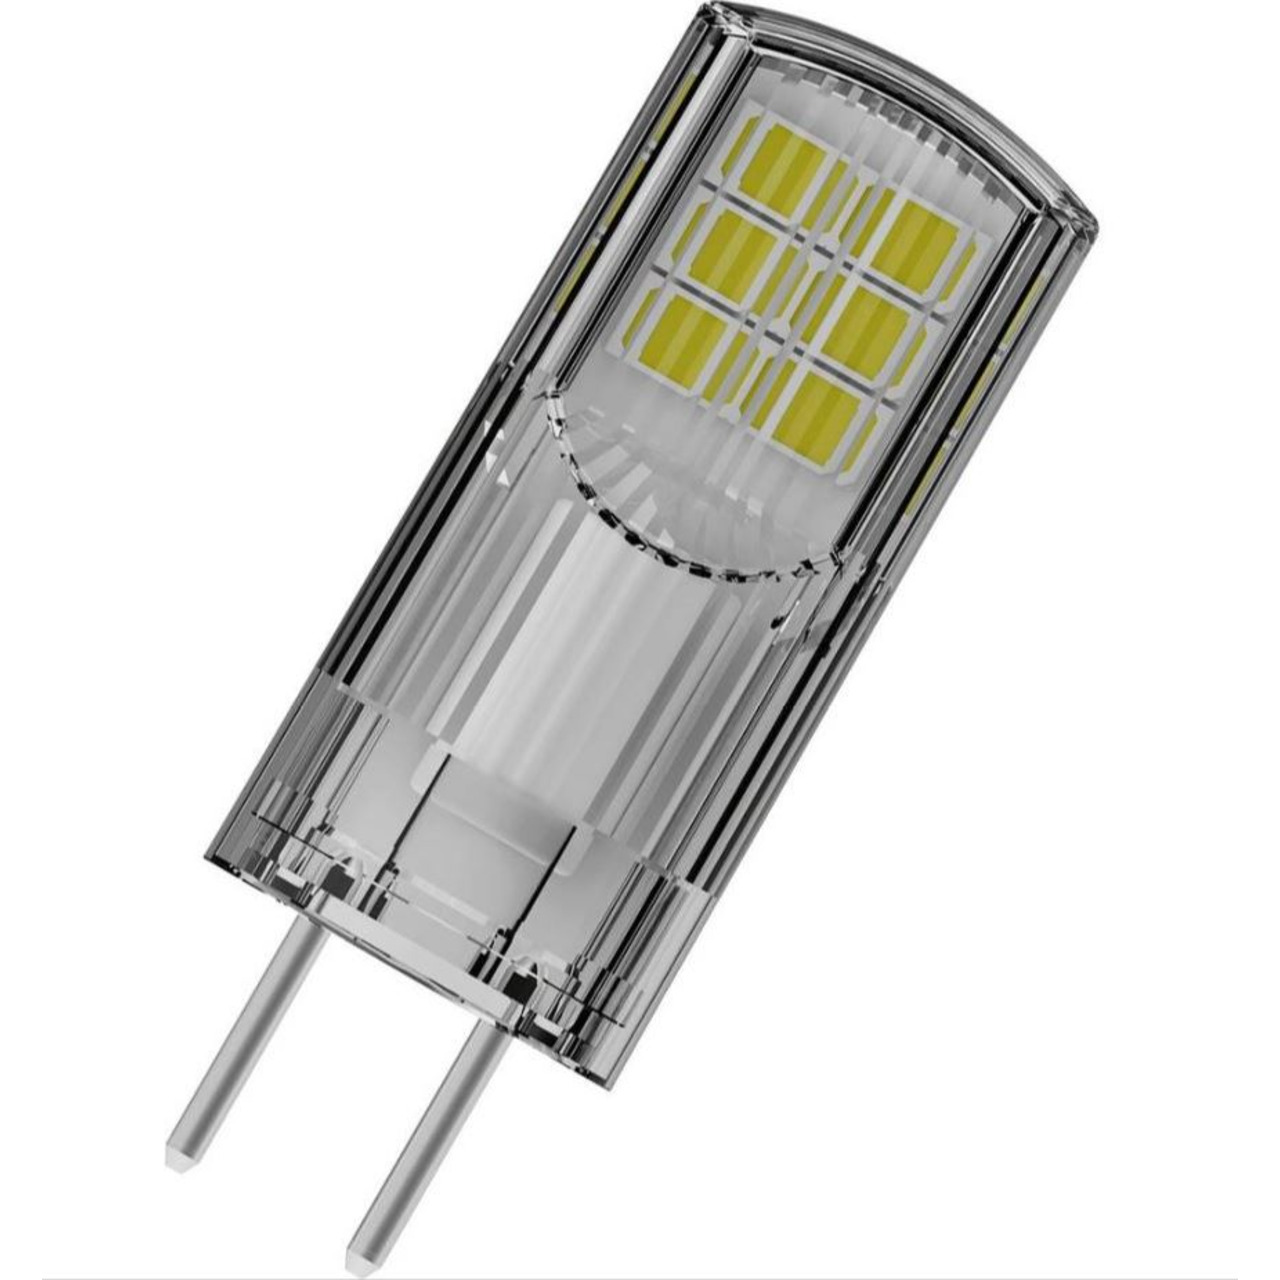 OSRAM LED STAR PIN 2-6-W-GY6-35-LED-Lampe- warmweiss